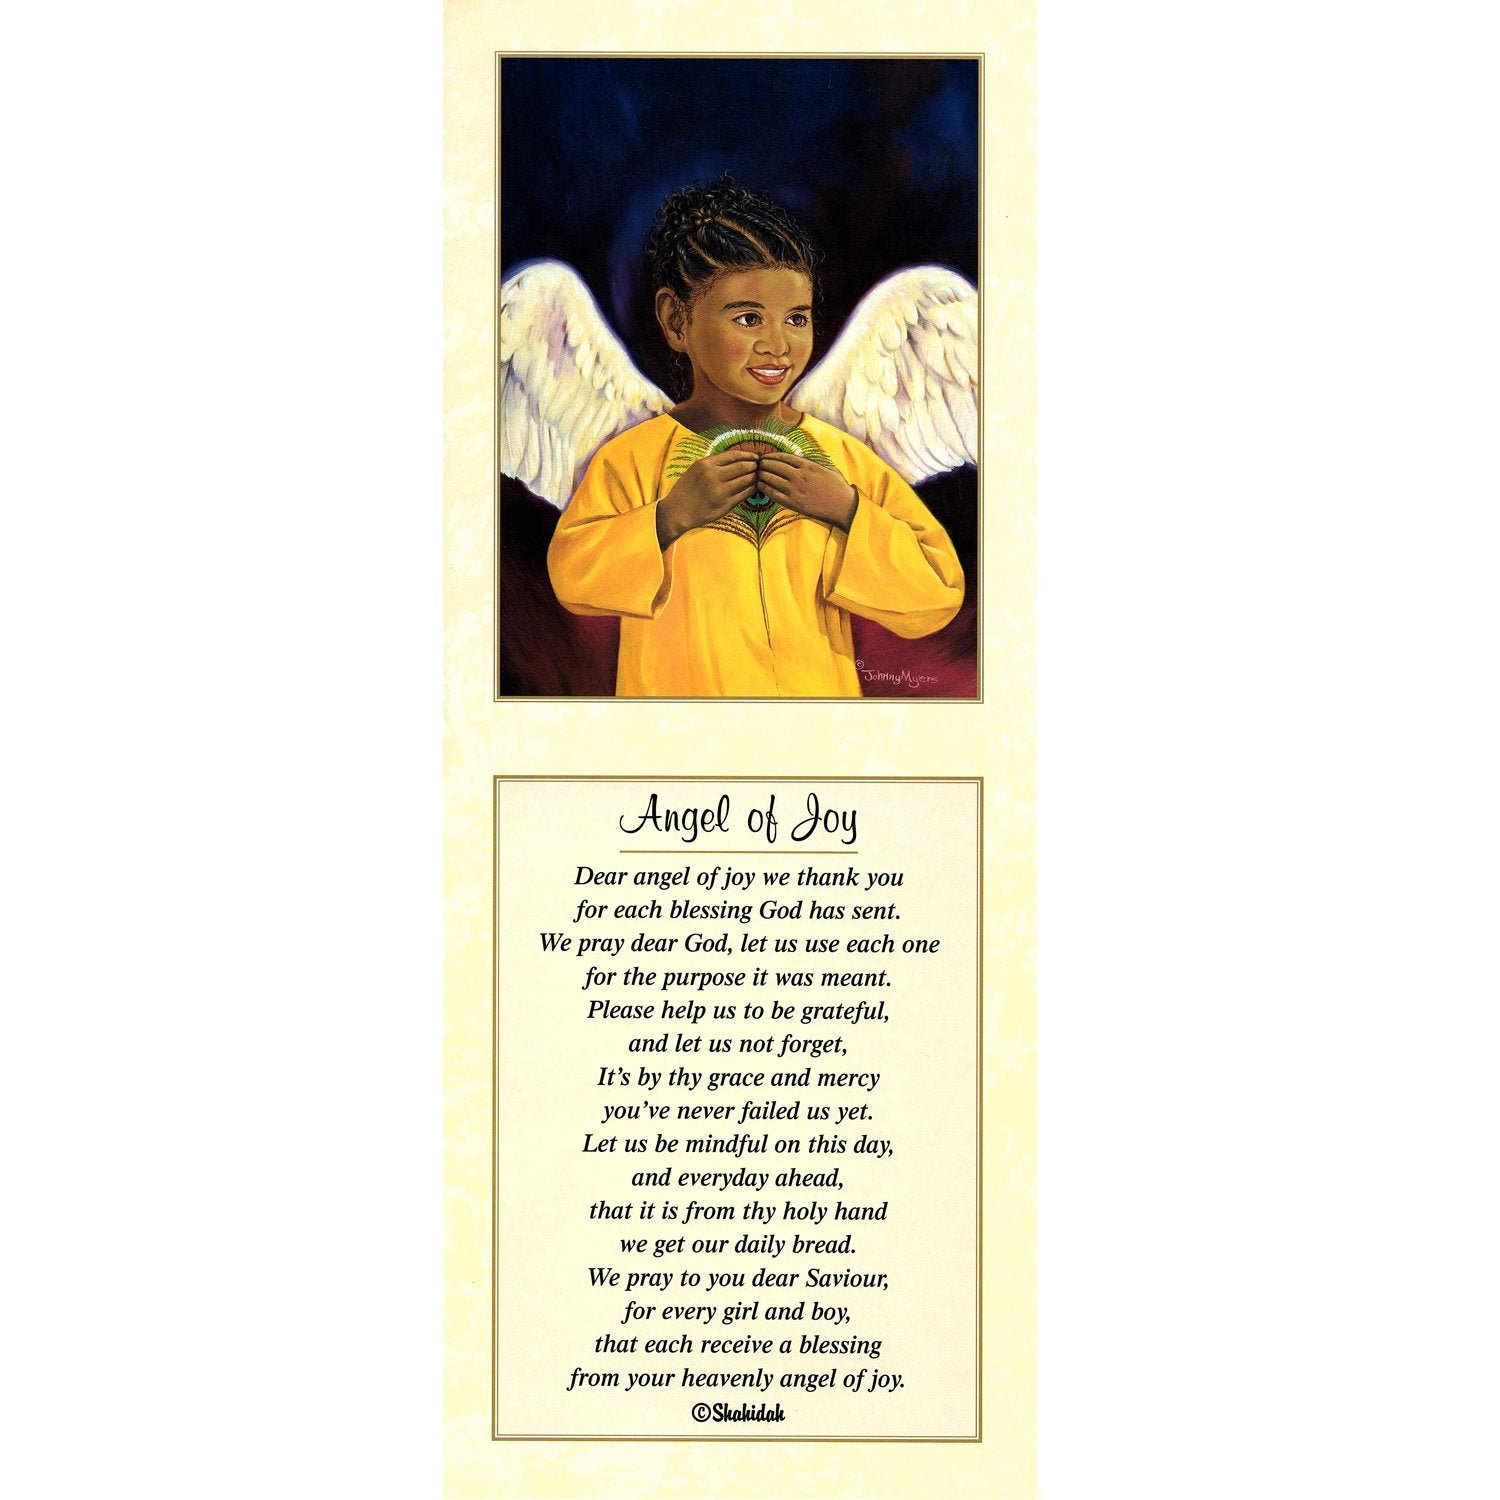 1 of 3: Angel of Joy by Johnny Myers and Shahidah